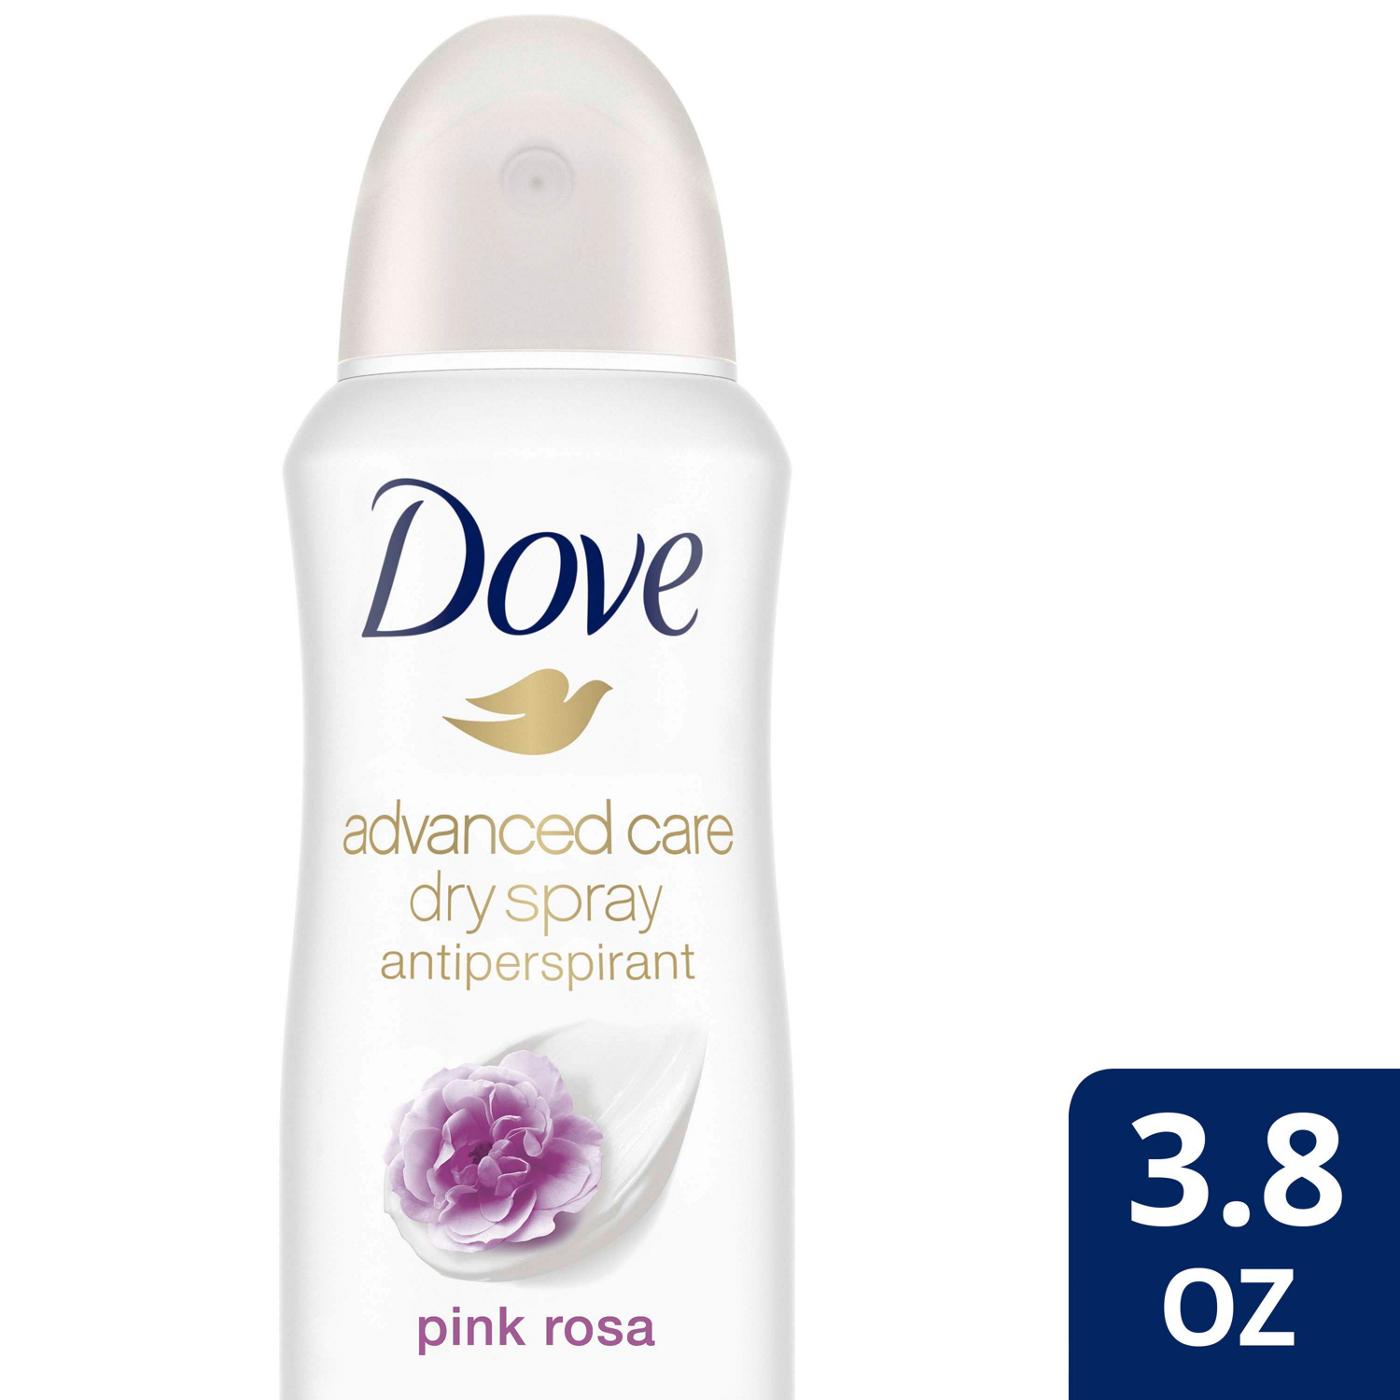 Dove Advanced Care Pink Rosa Dry Spray Antiperspirant Deodorant; image 3 of 3